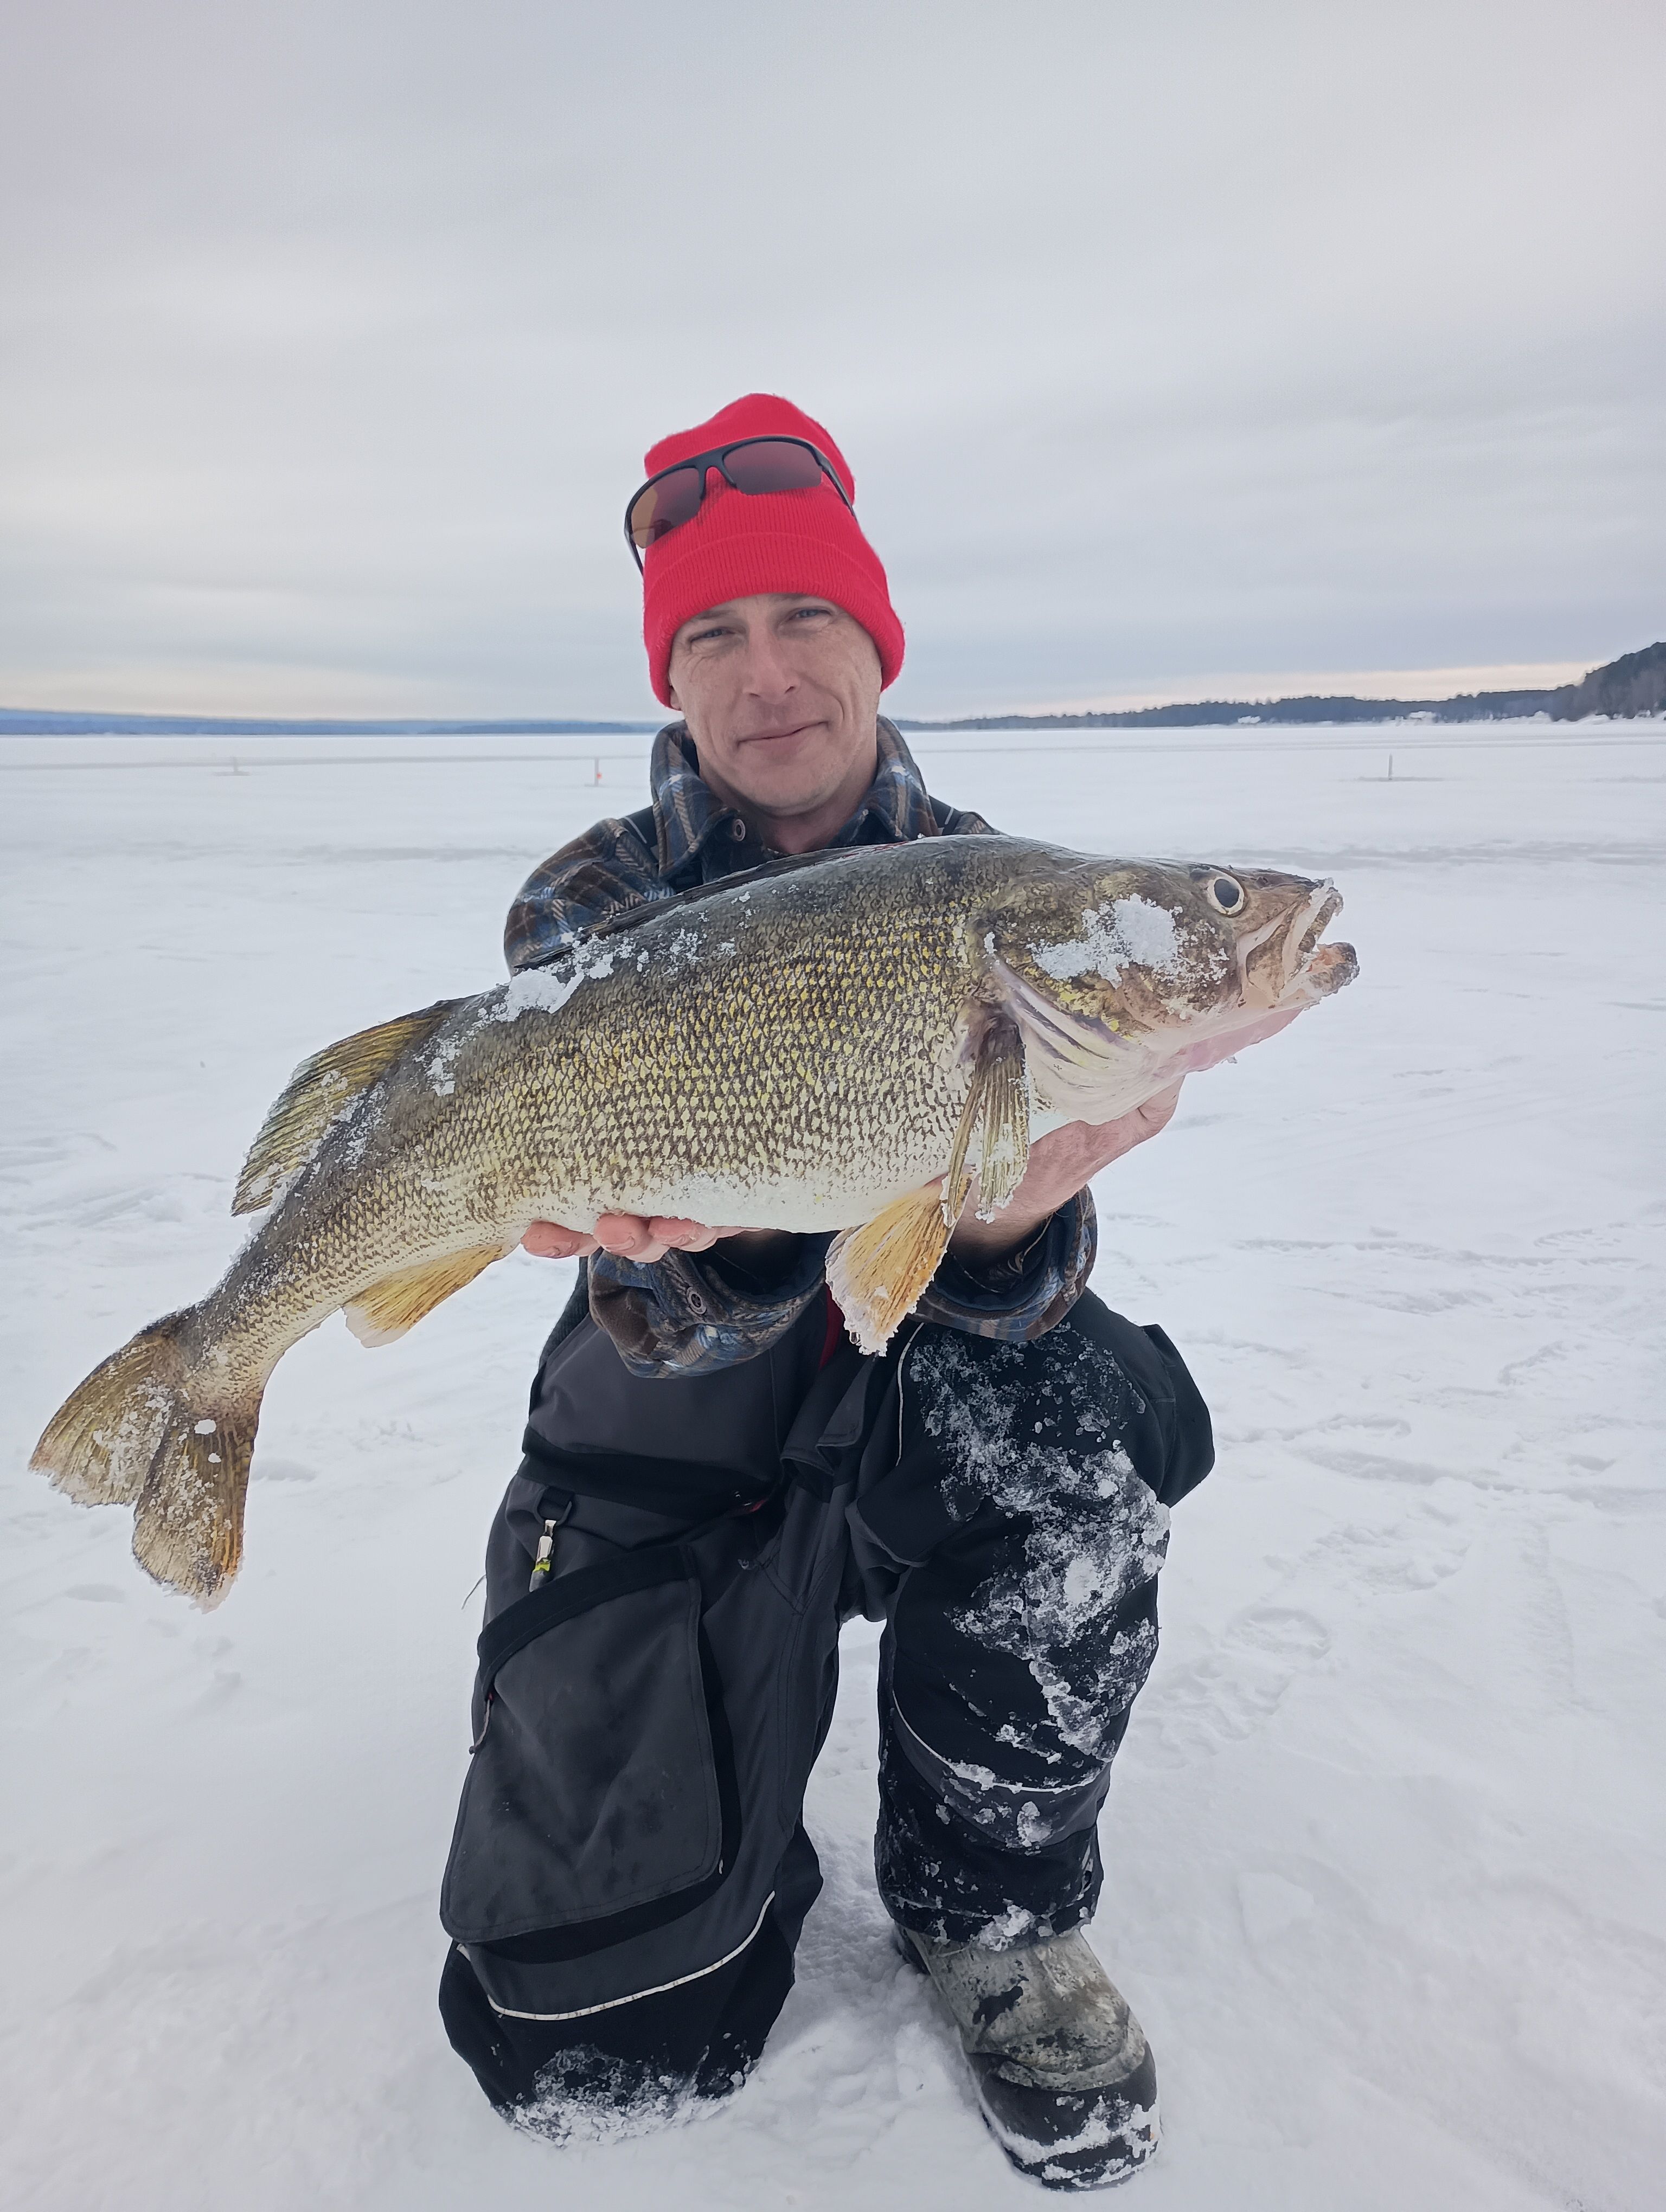 Gallery: Ice fishing in the Adirondacks